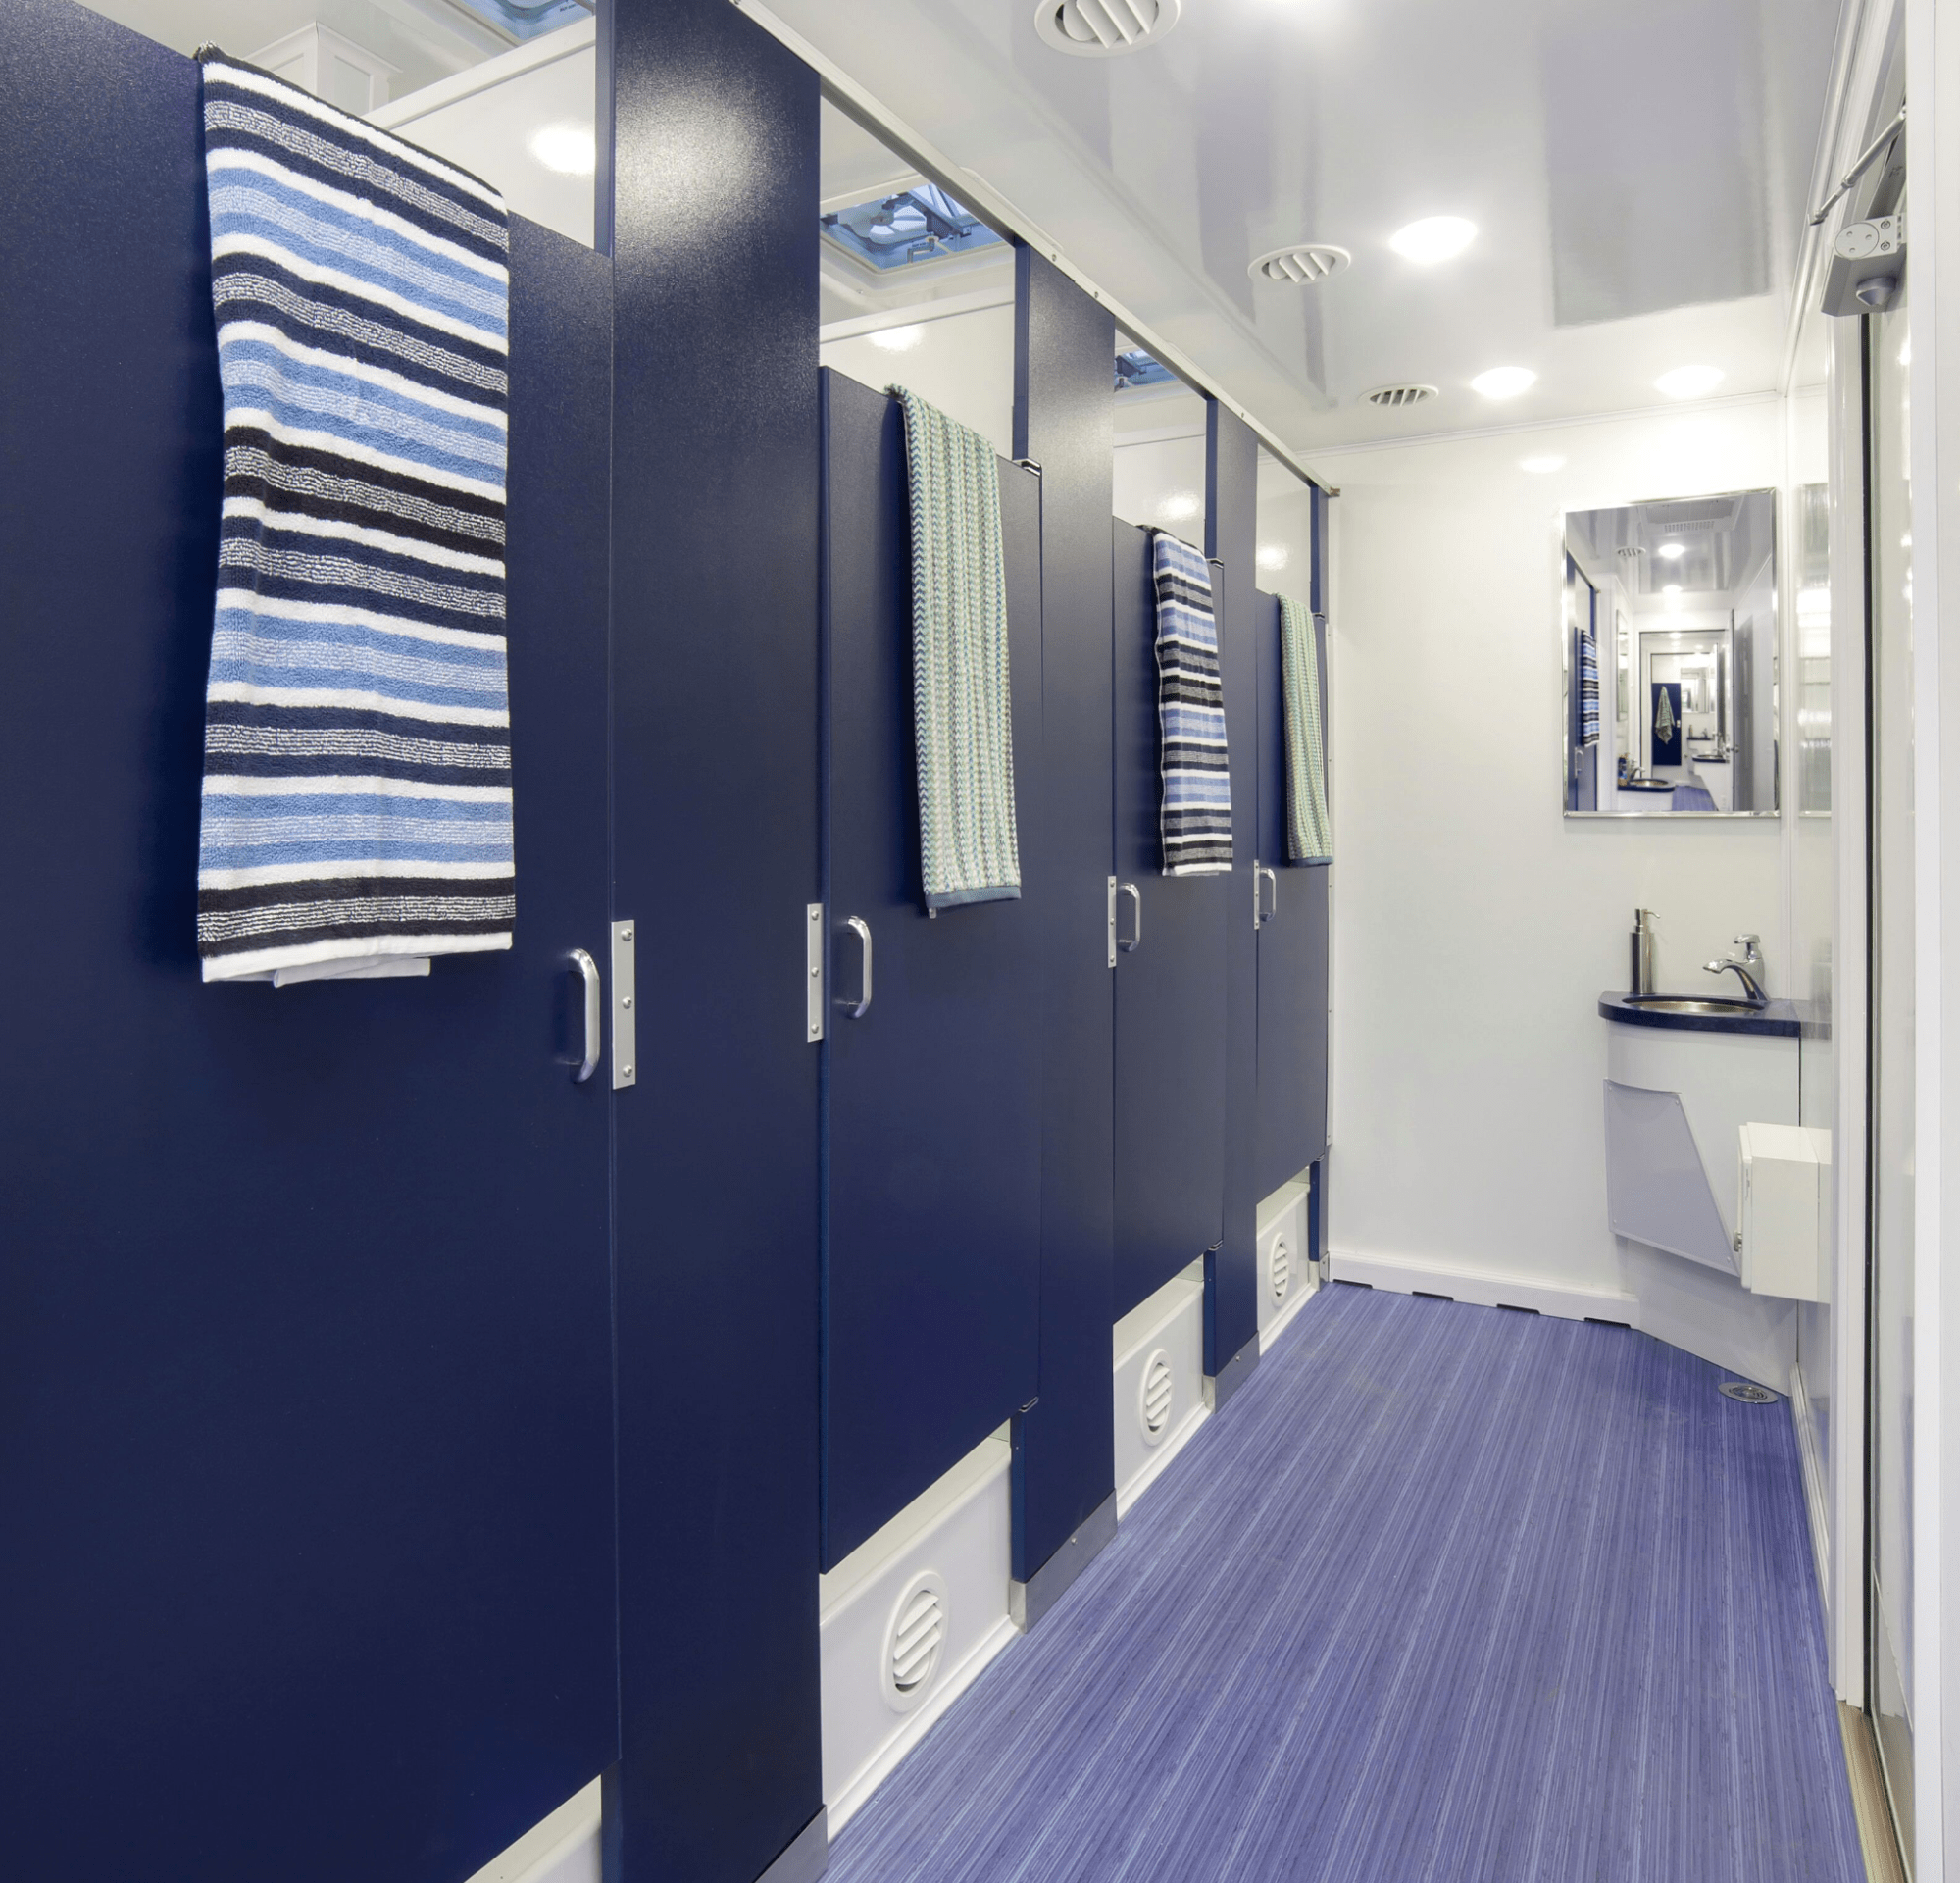 Inside a luxurious restroom trailer in Homestead, Florida